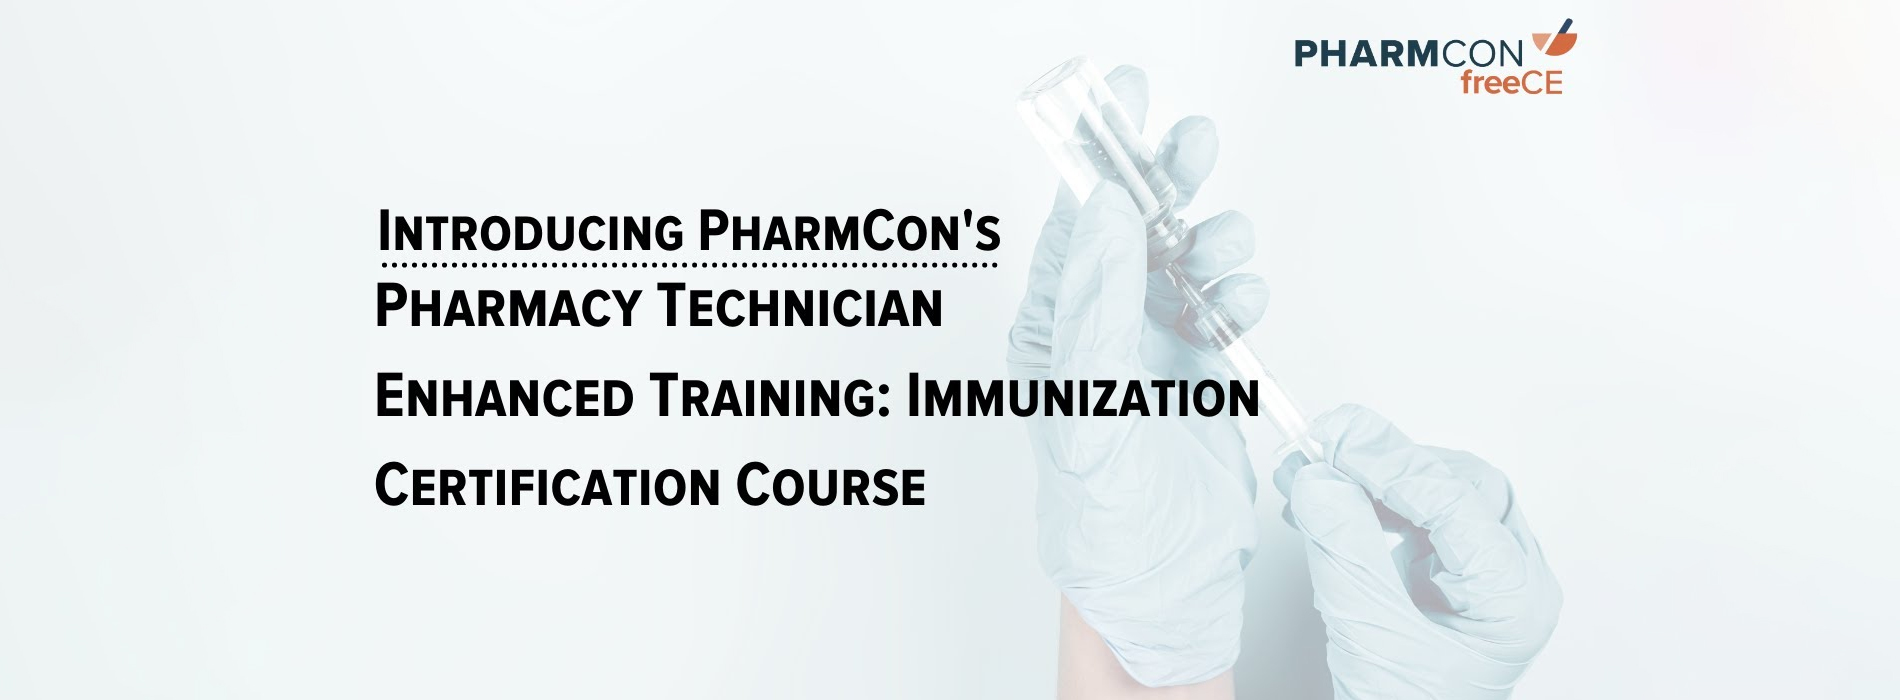 PharmCon Launches Immunization Training Program for Pharmacy Technicians